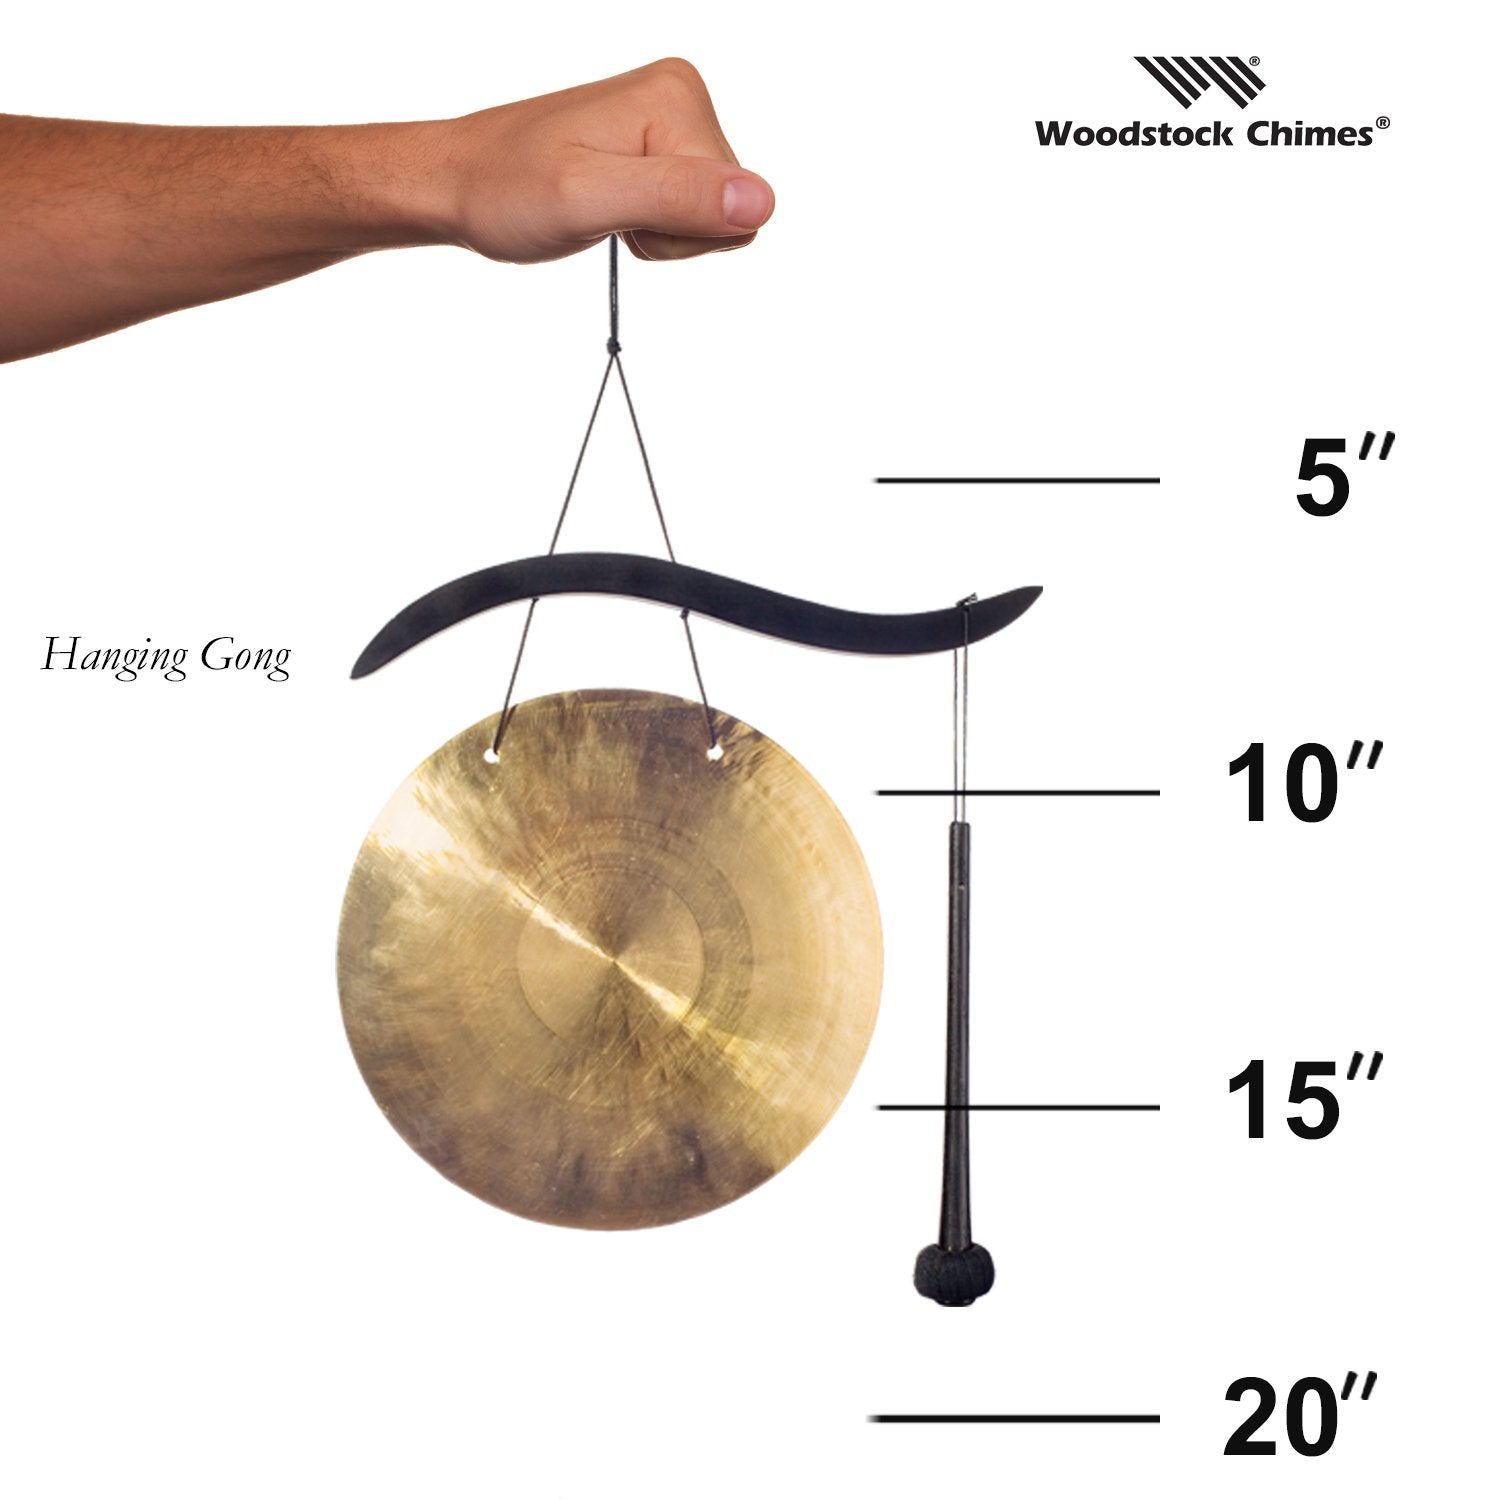 Hanging Gong proportion image